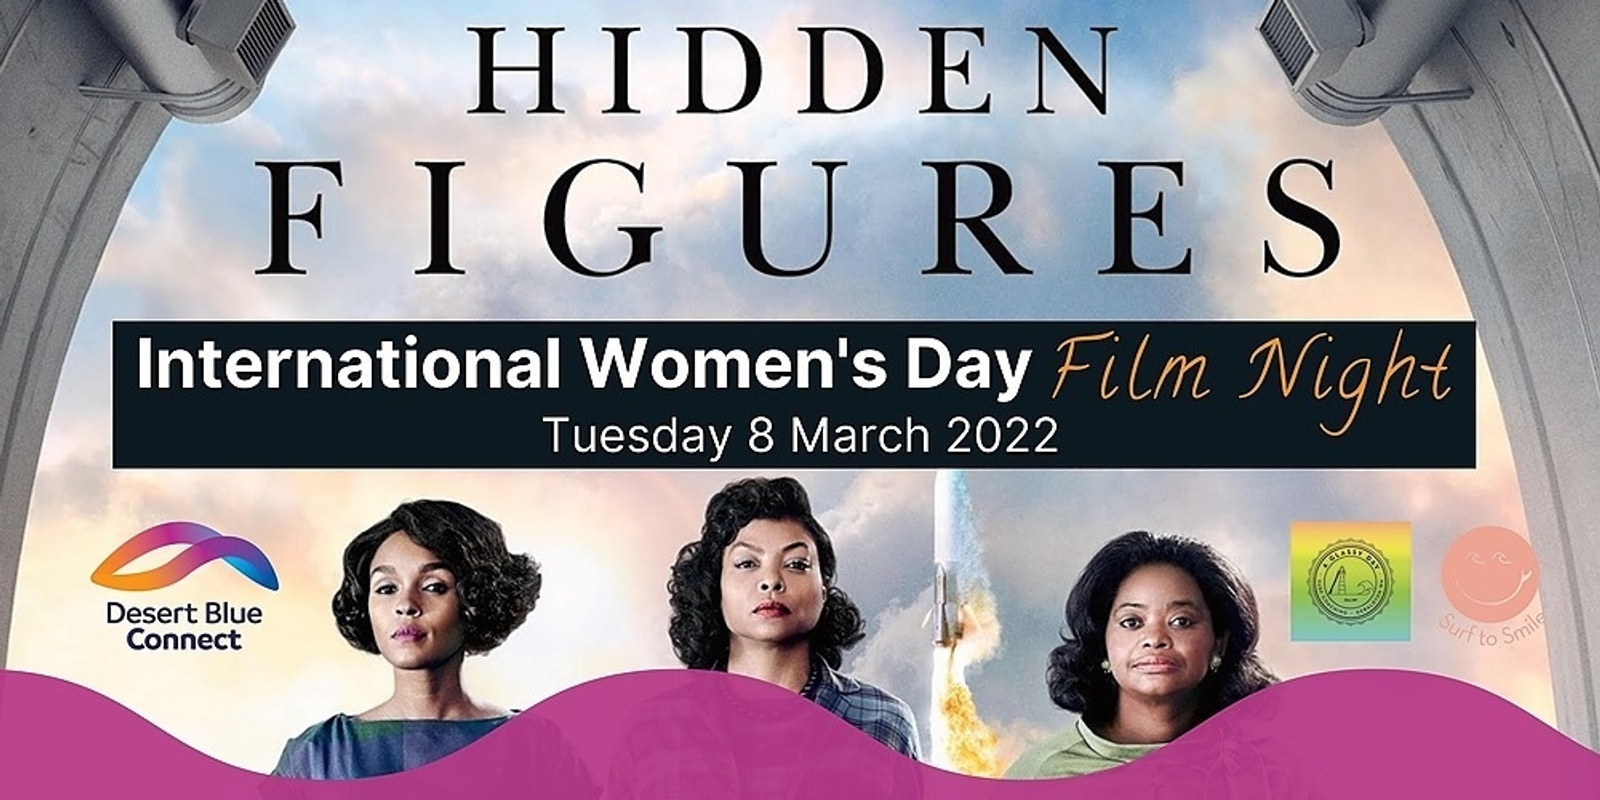 Banner image for International Women's Day Film Night 'Showing Hidden Figures'